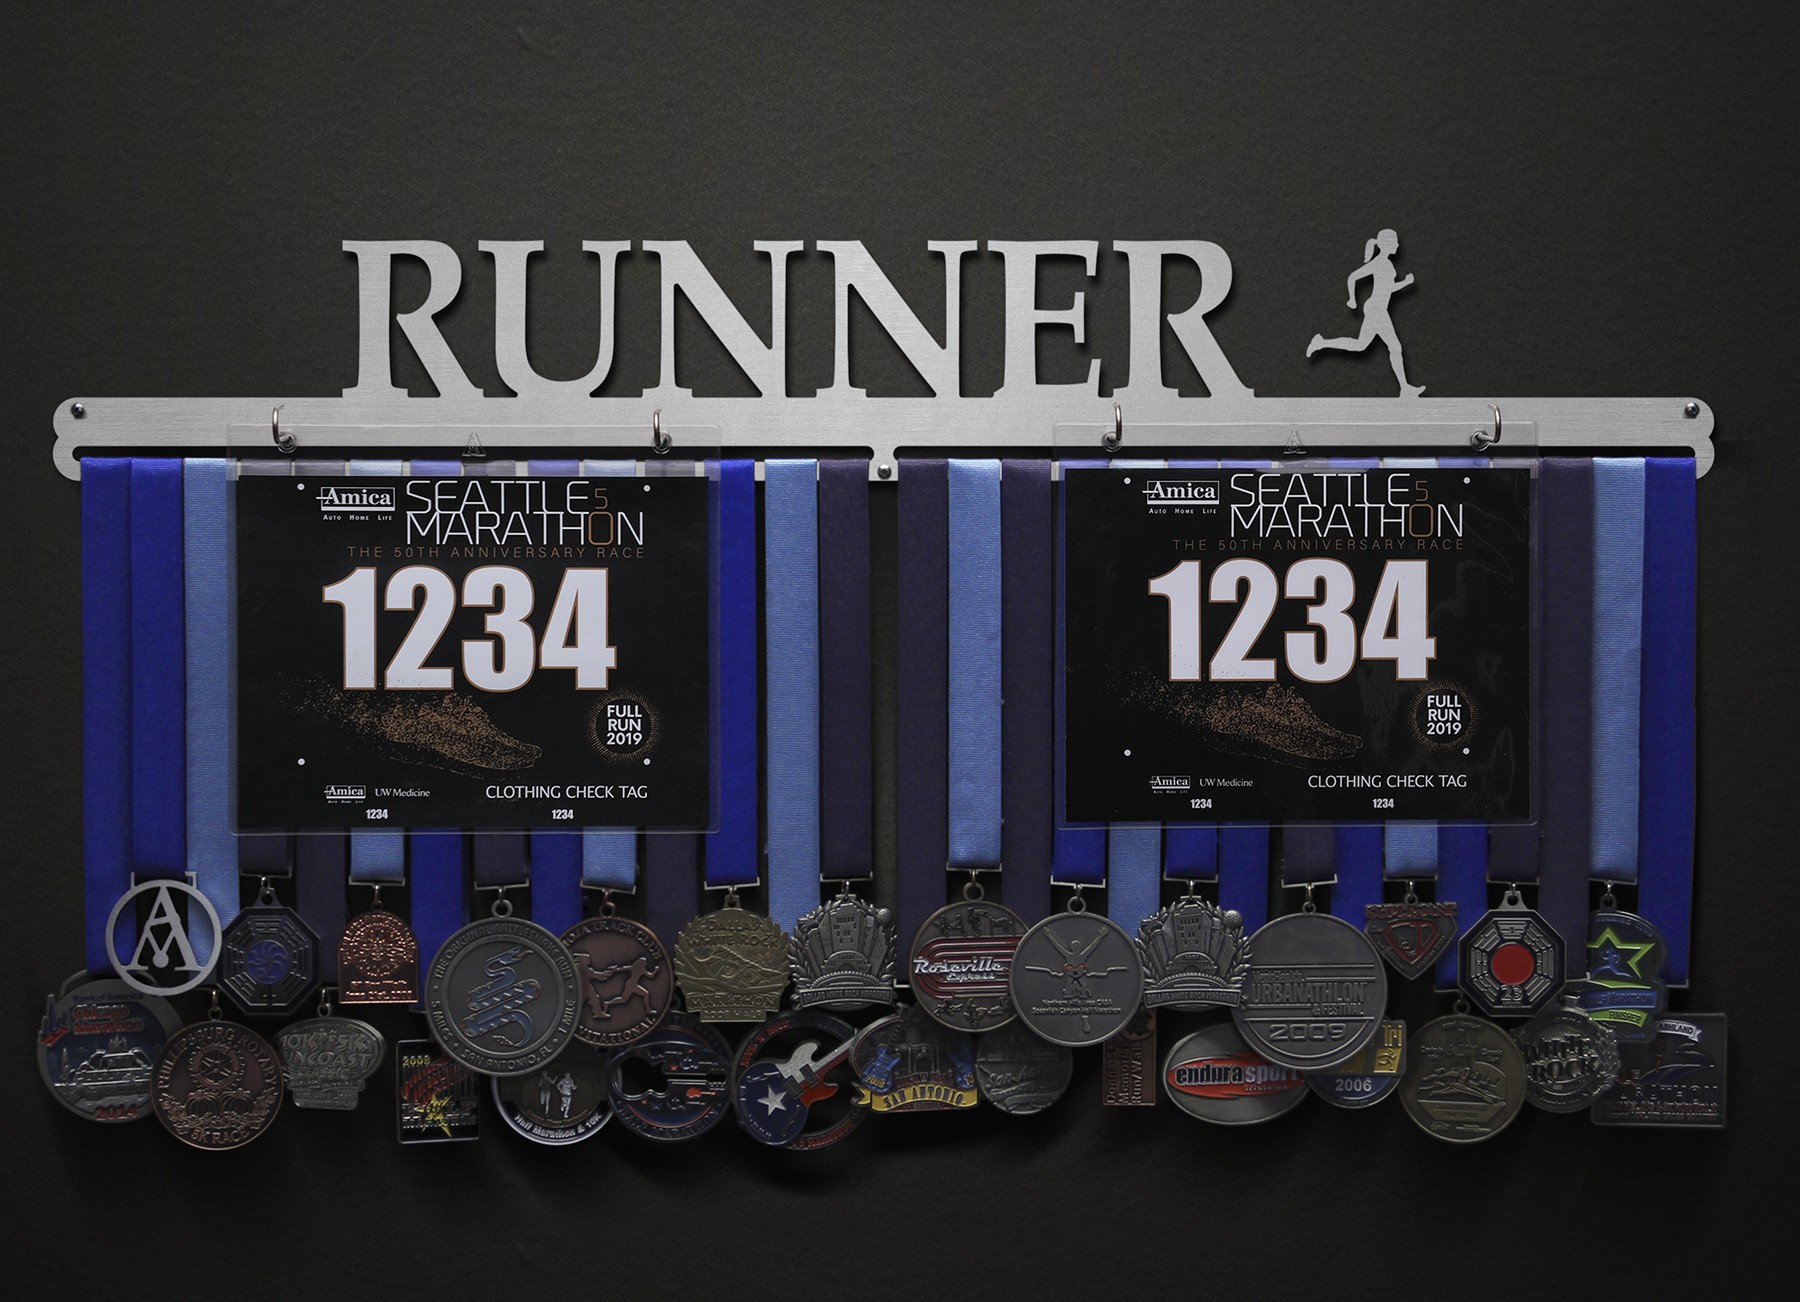 Runner Bib and Medal Display - Female